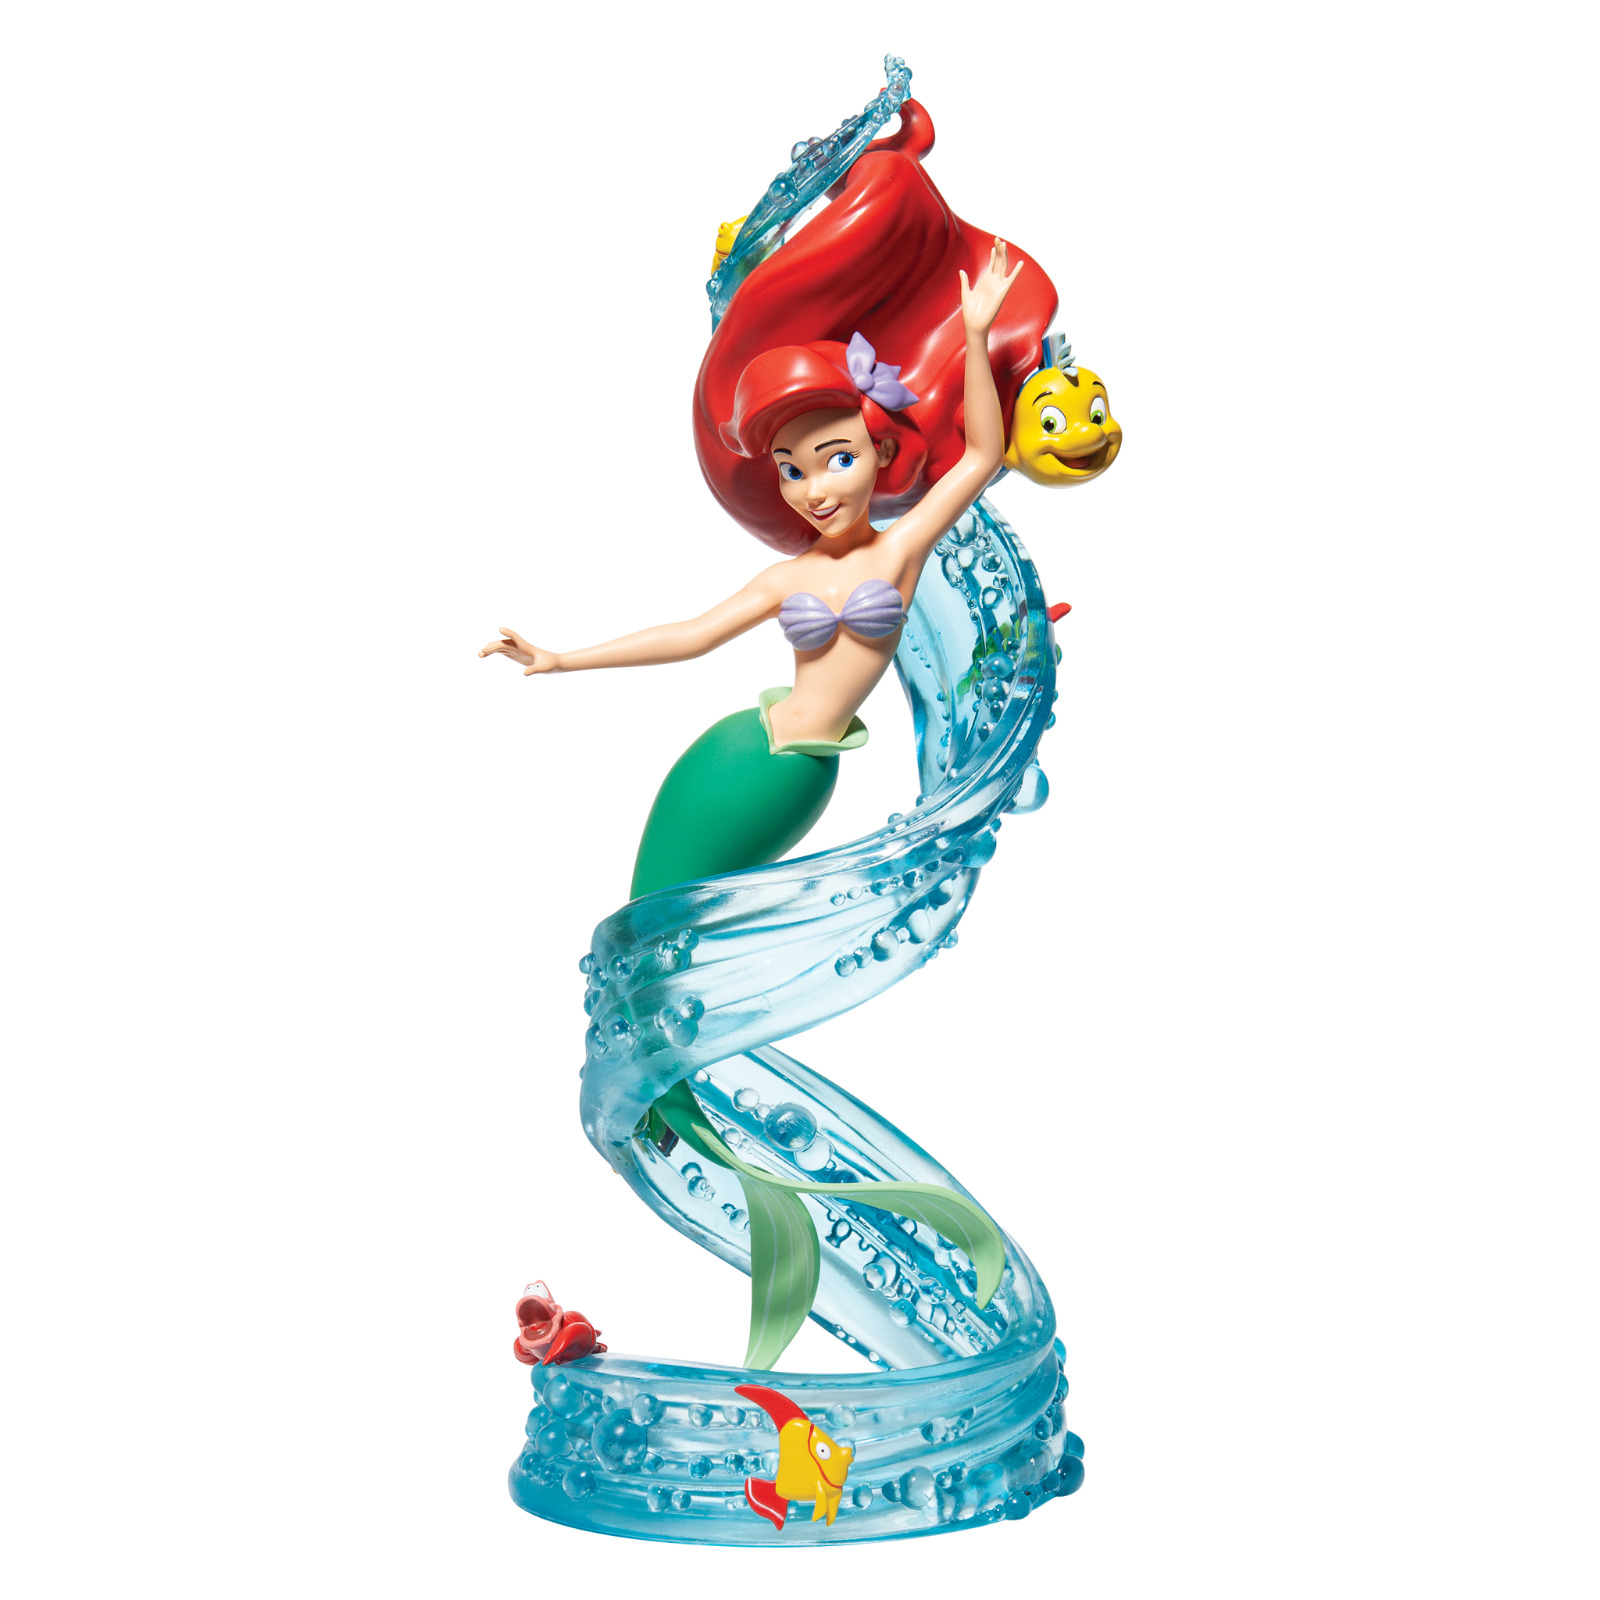 Enesco Grand Jester Studios Disney the Little Mermaid Ariel Anniversary Figurine